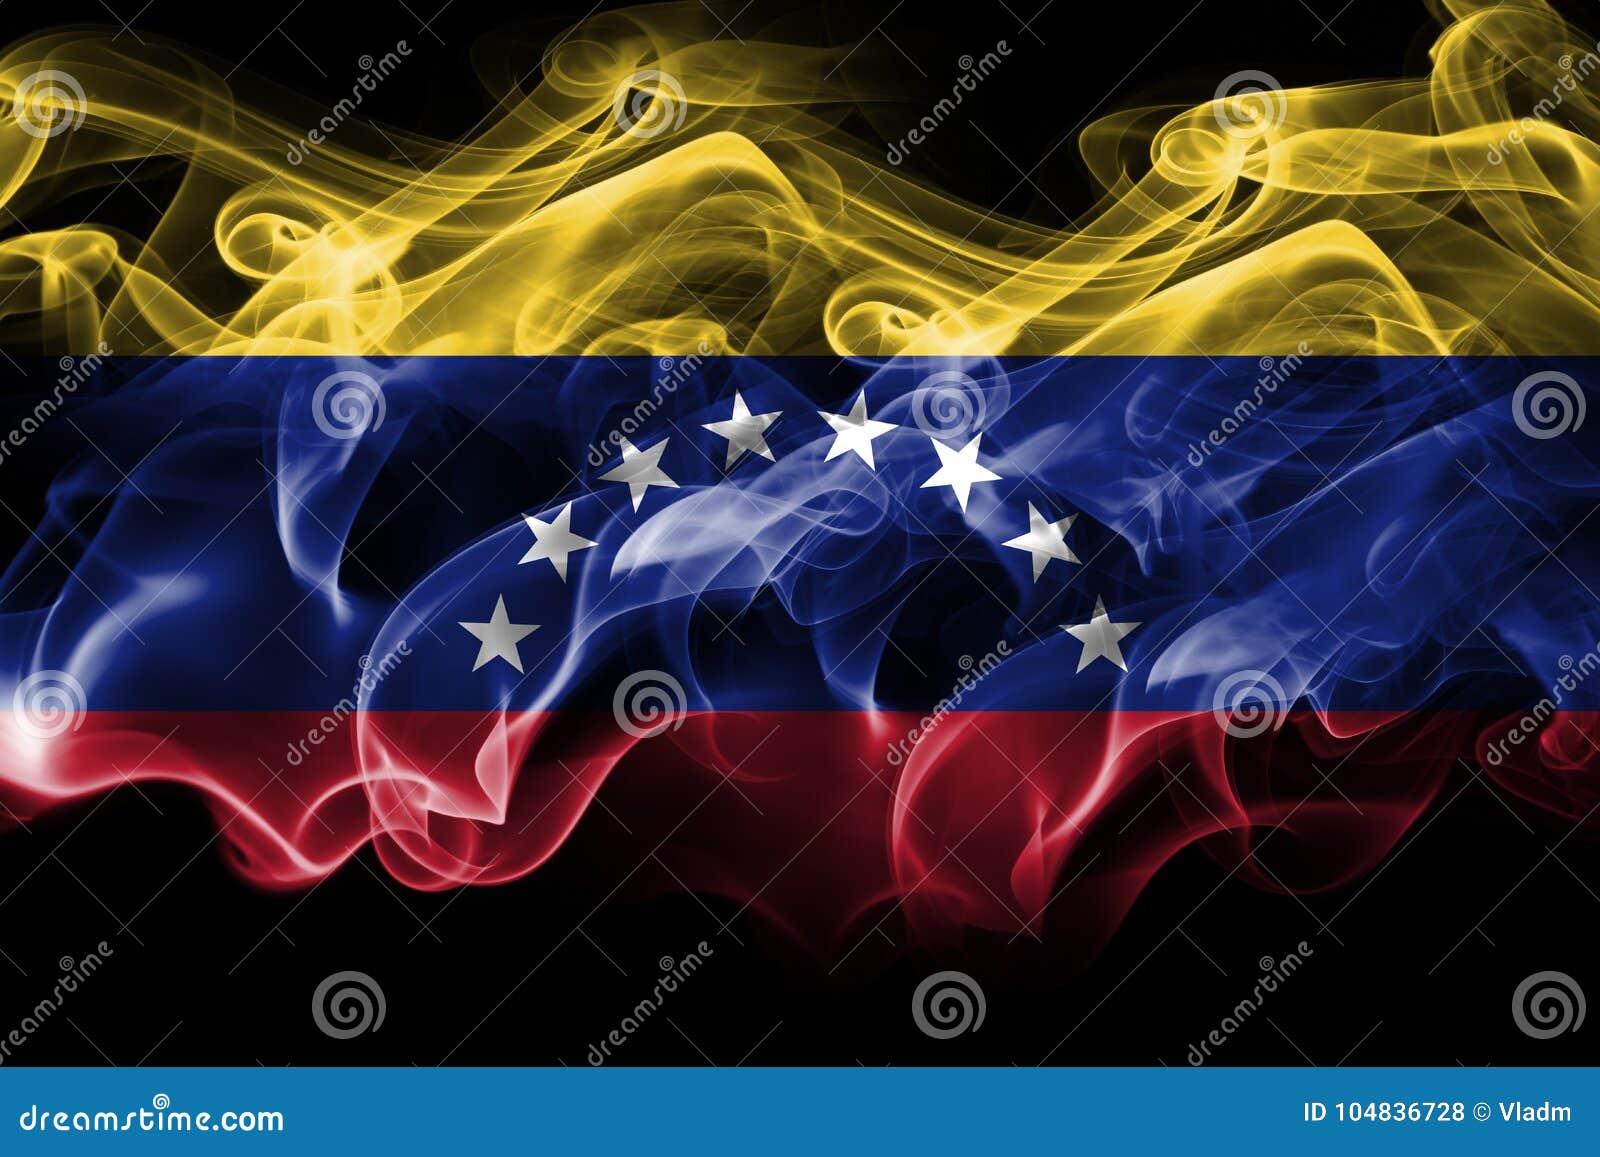 venezuela smoke flag